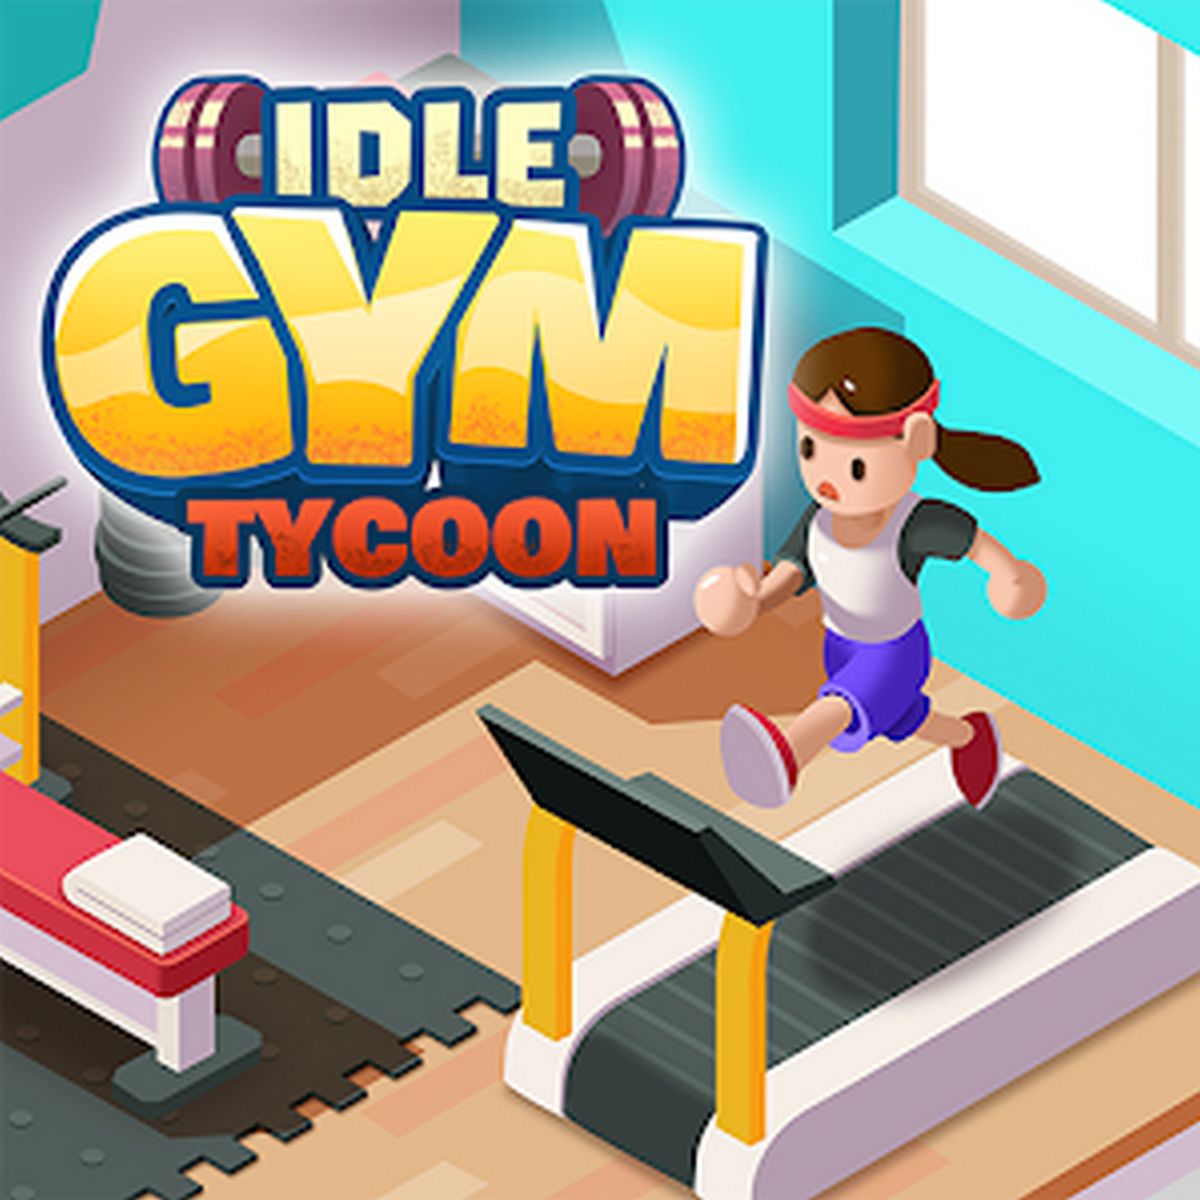 Idle Fitness Gym Tycoon - Workout Simulator